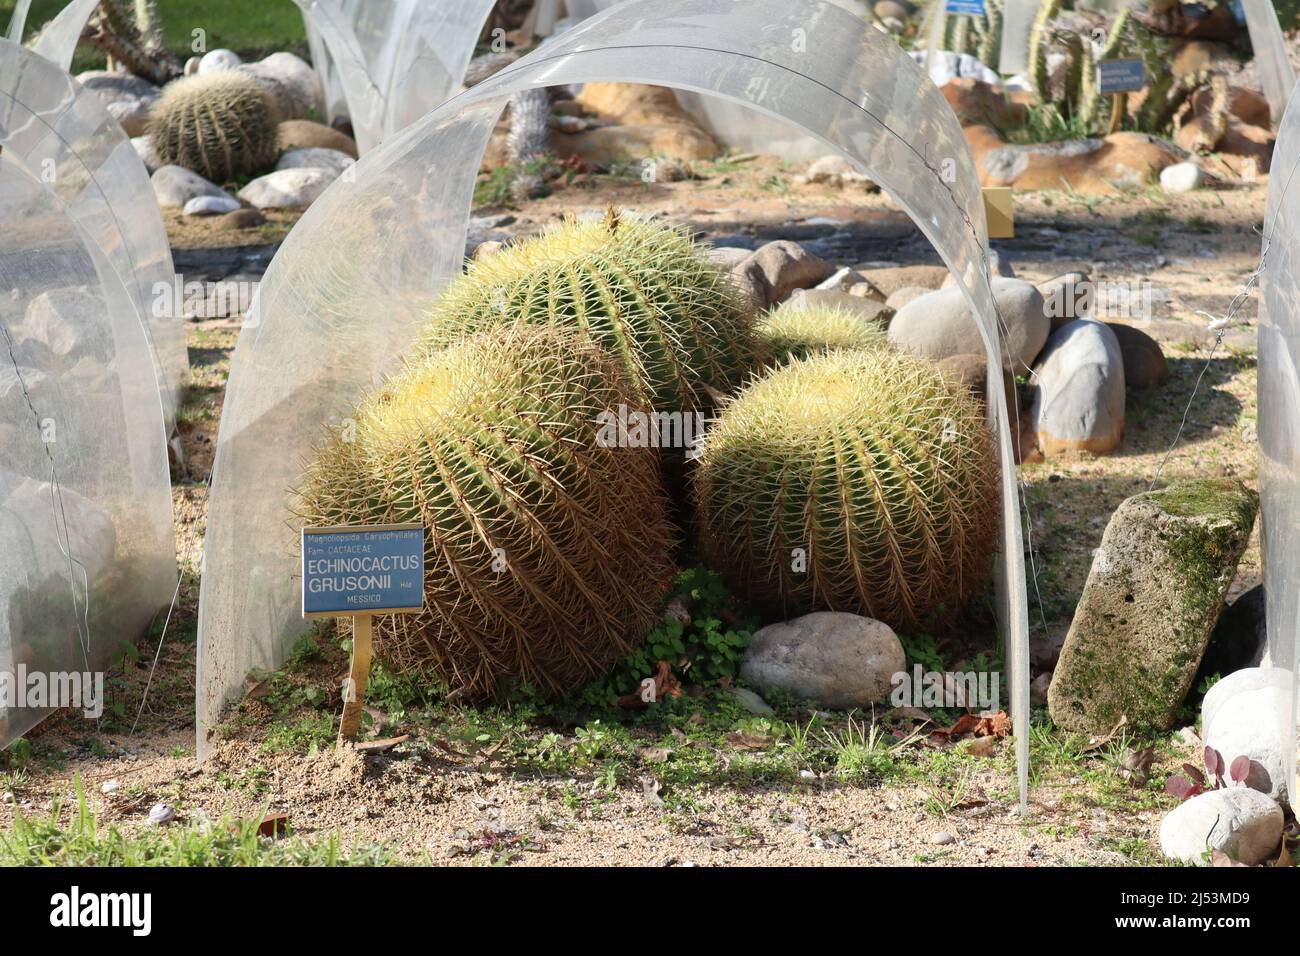 Napoli - Pianta di Echinocactus Grisonii nell'Orto Botanico Stock Photo